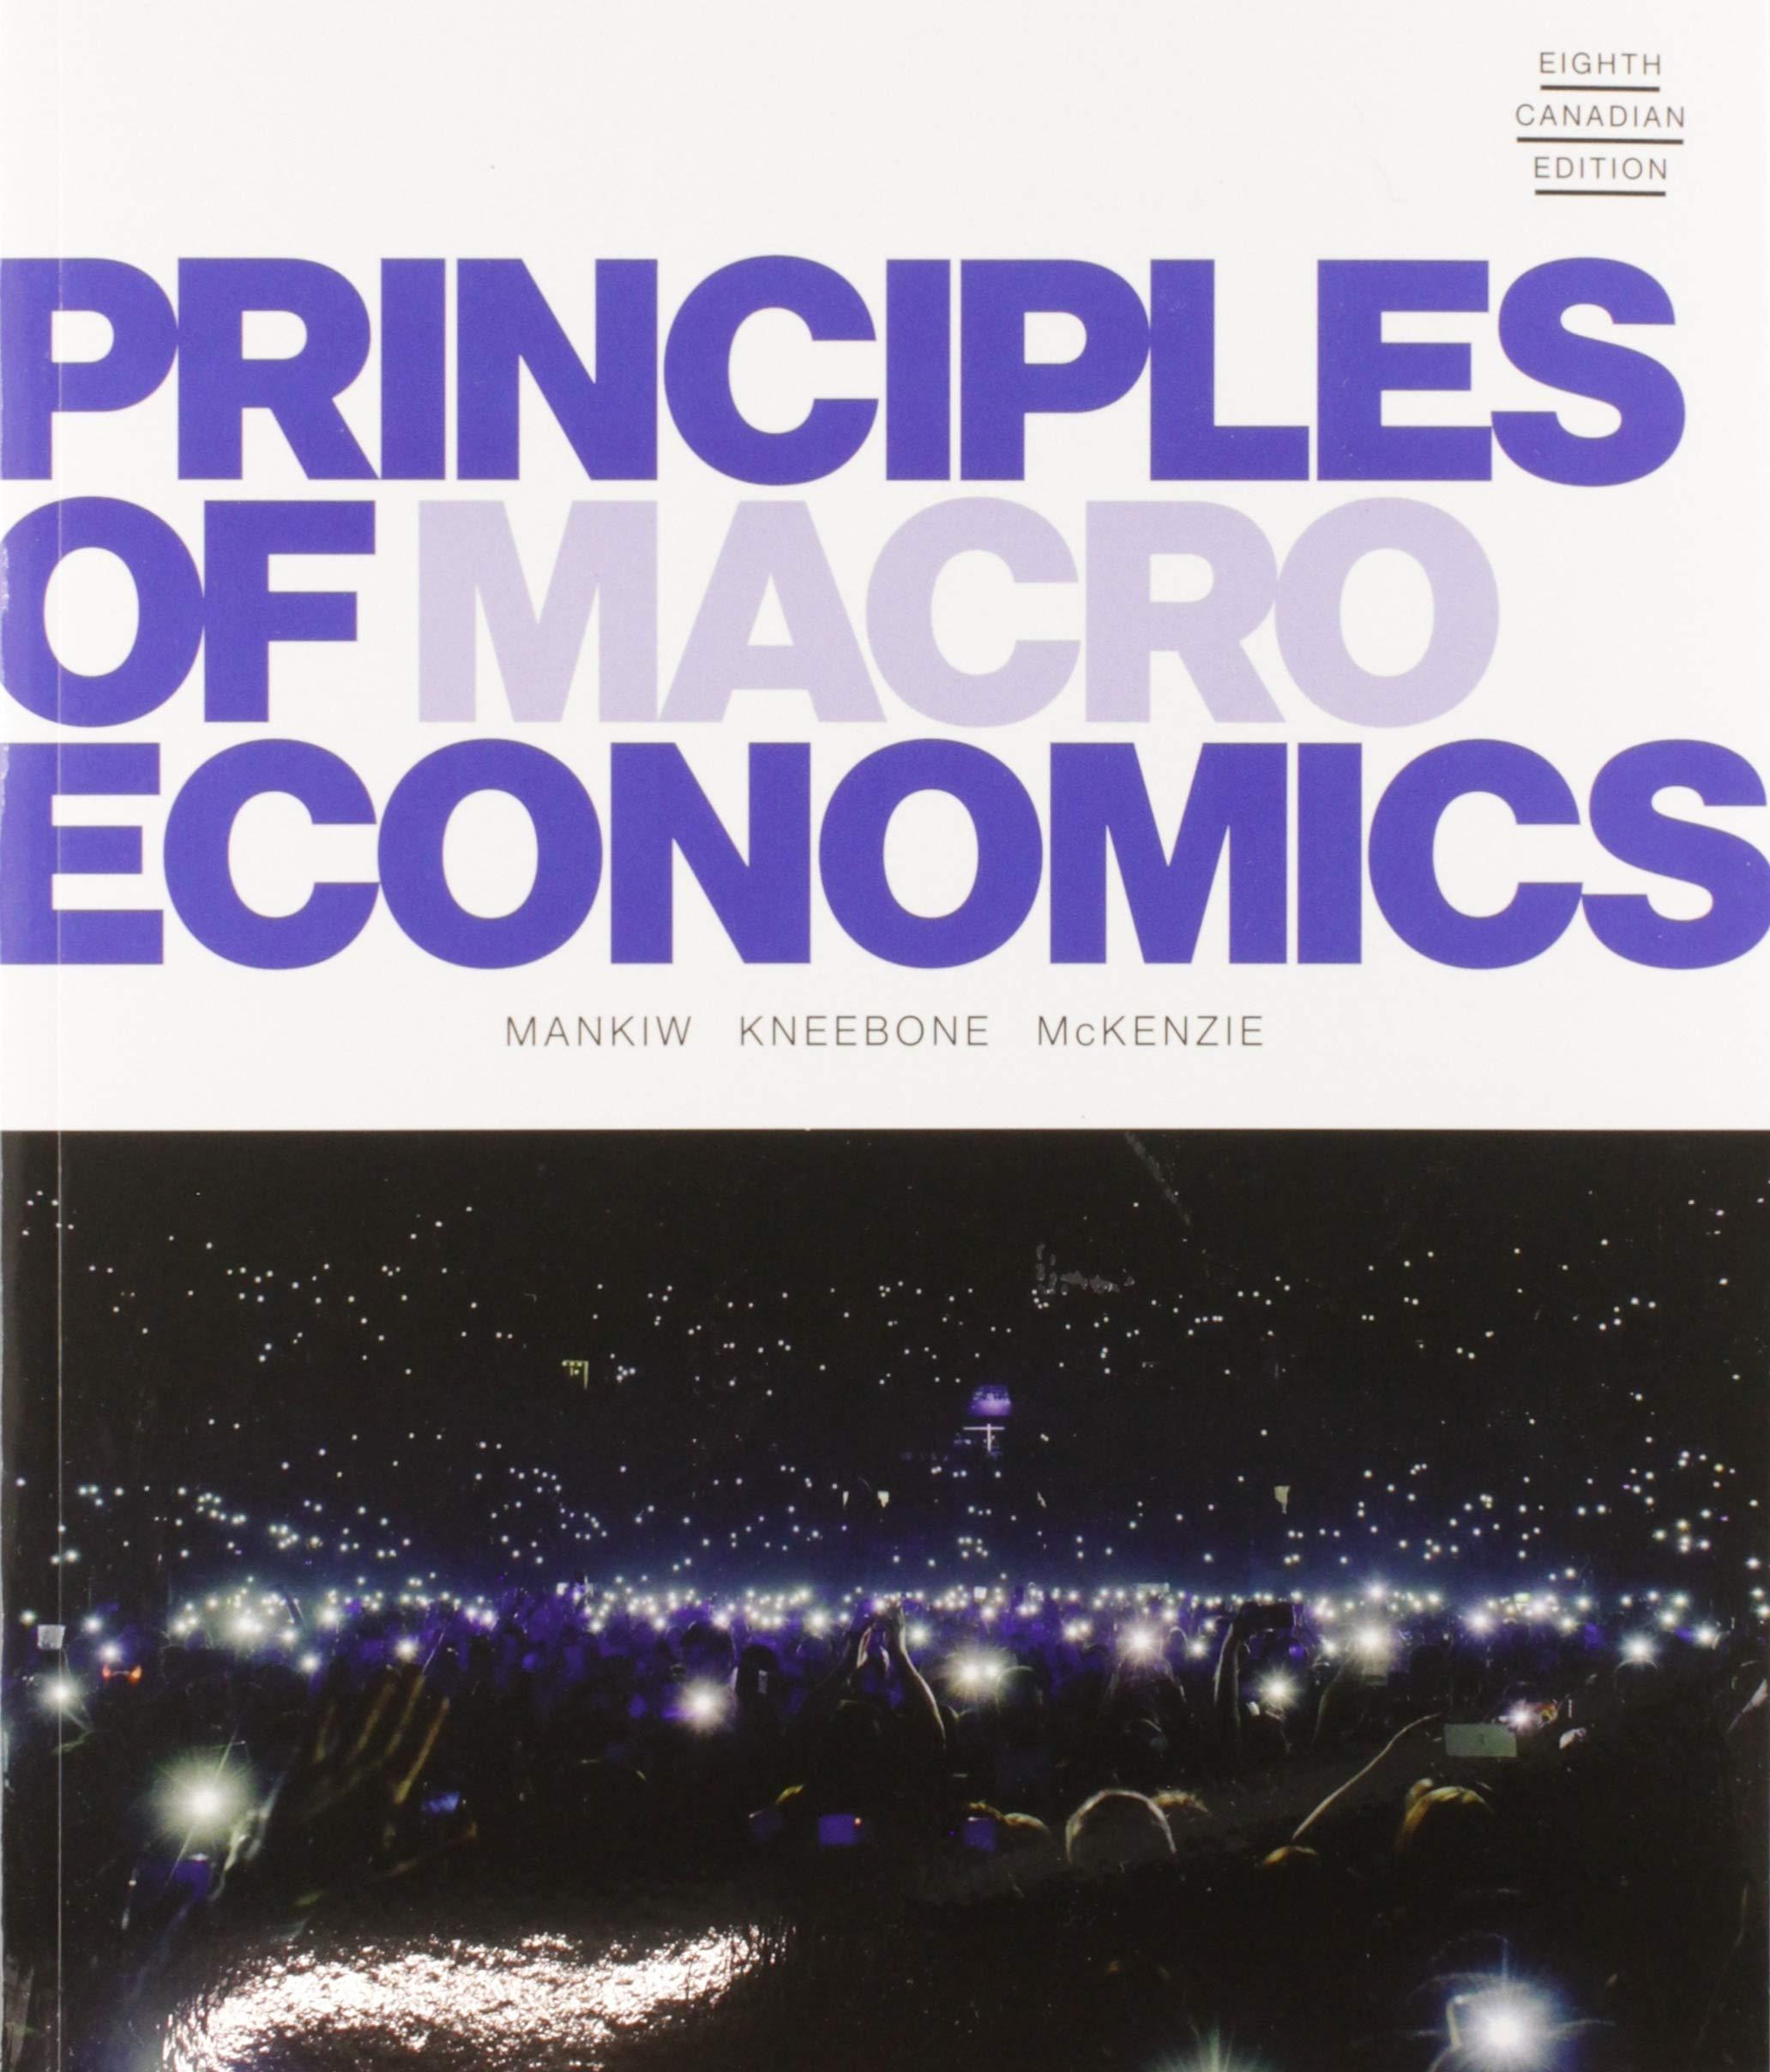 principles of macroeconomics 8th canadian edition n. mankiw, ronald kneebone, kenneth mckenzie 0176872833,